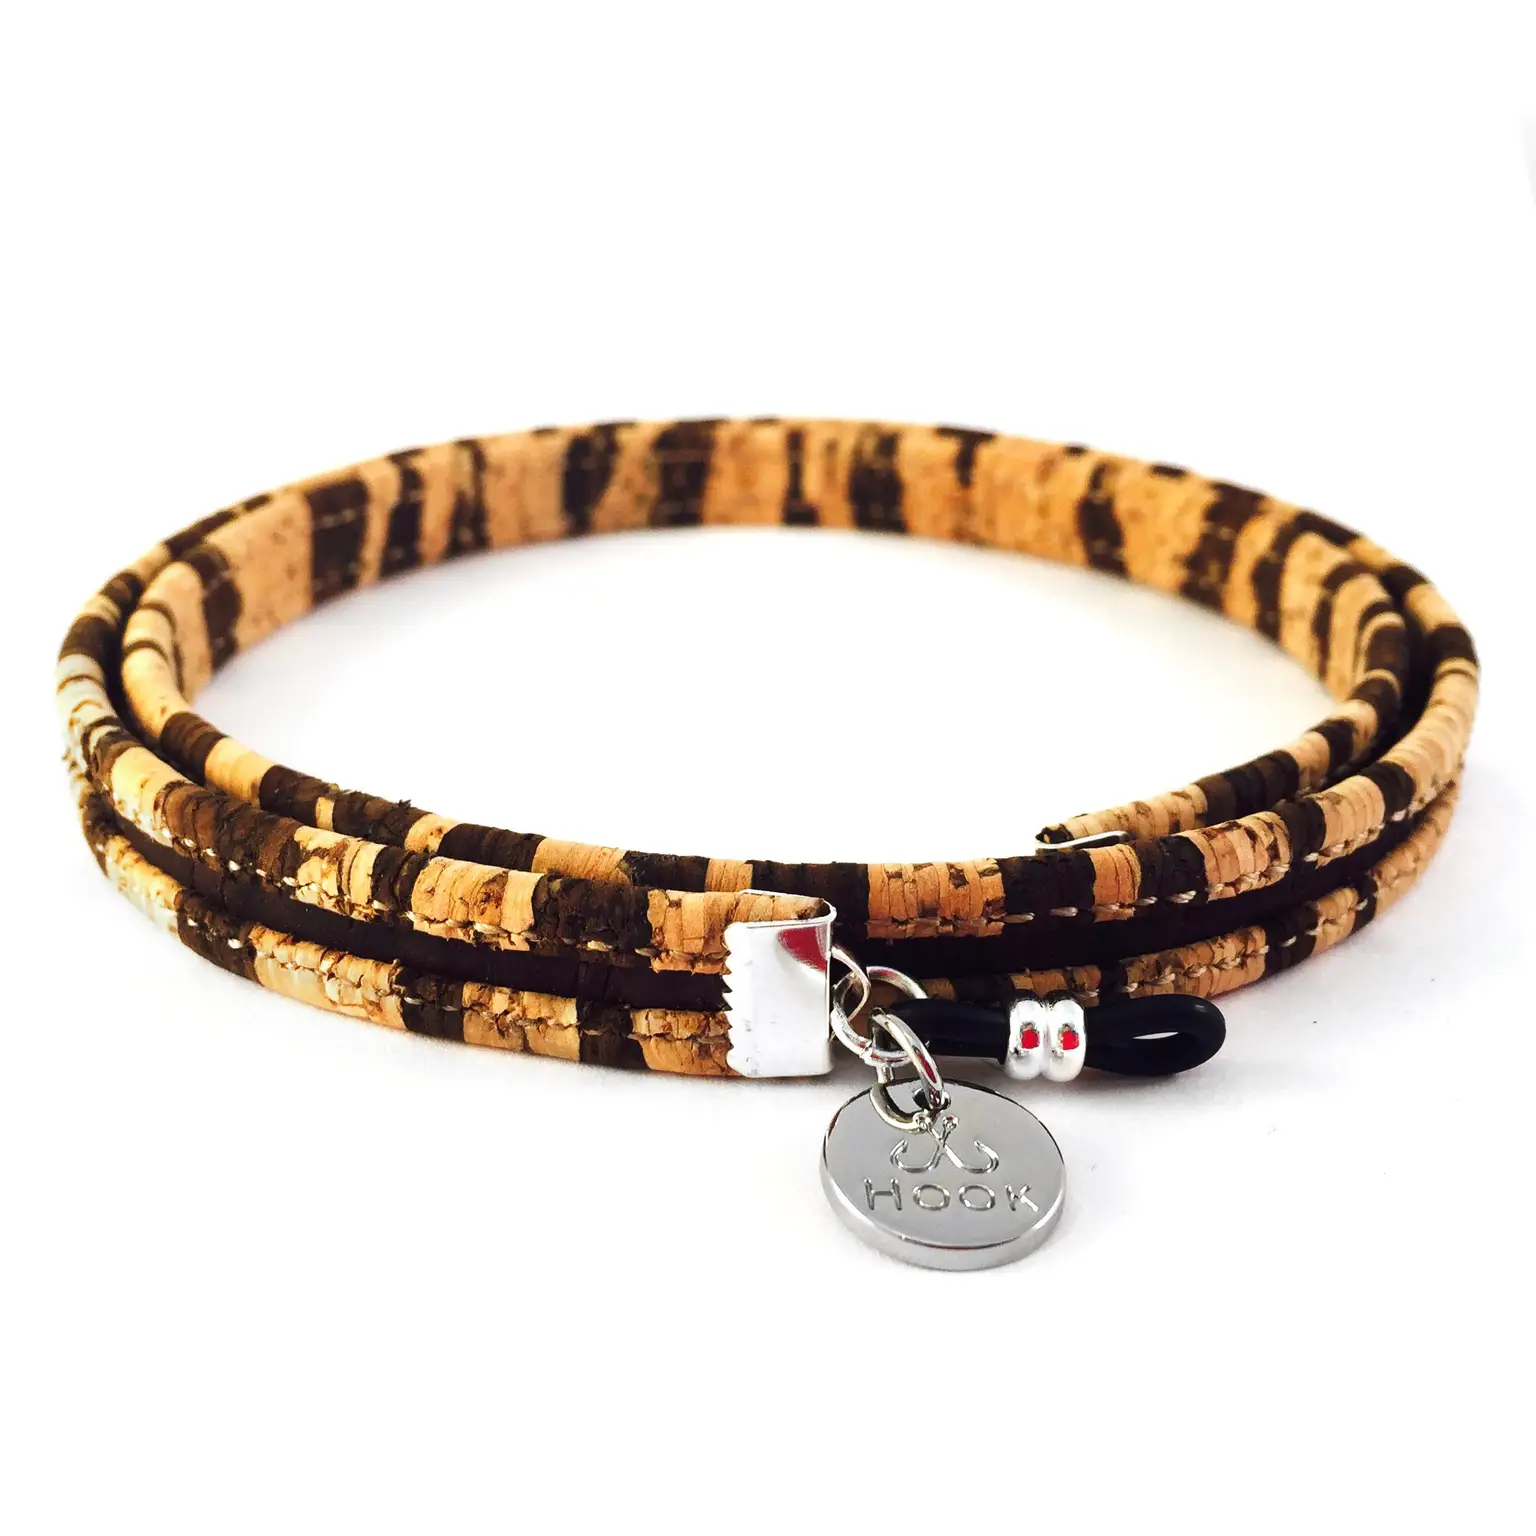 Shop Exotic Leather Bracelets for Women, Cute Bracelets - Kate